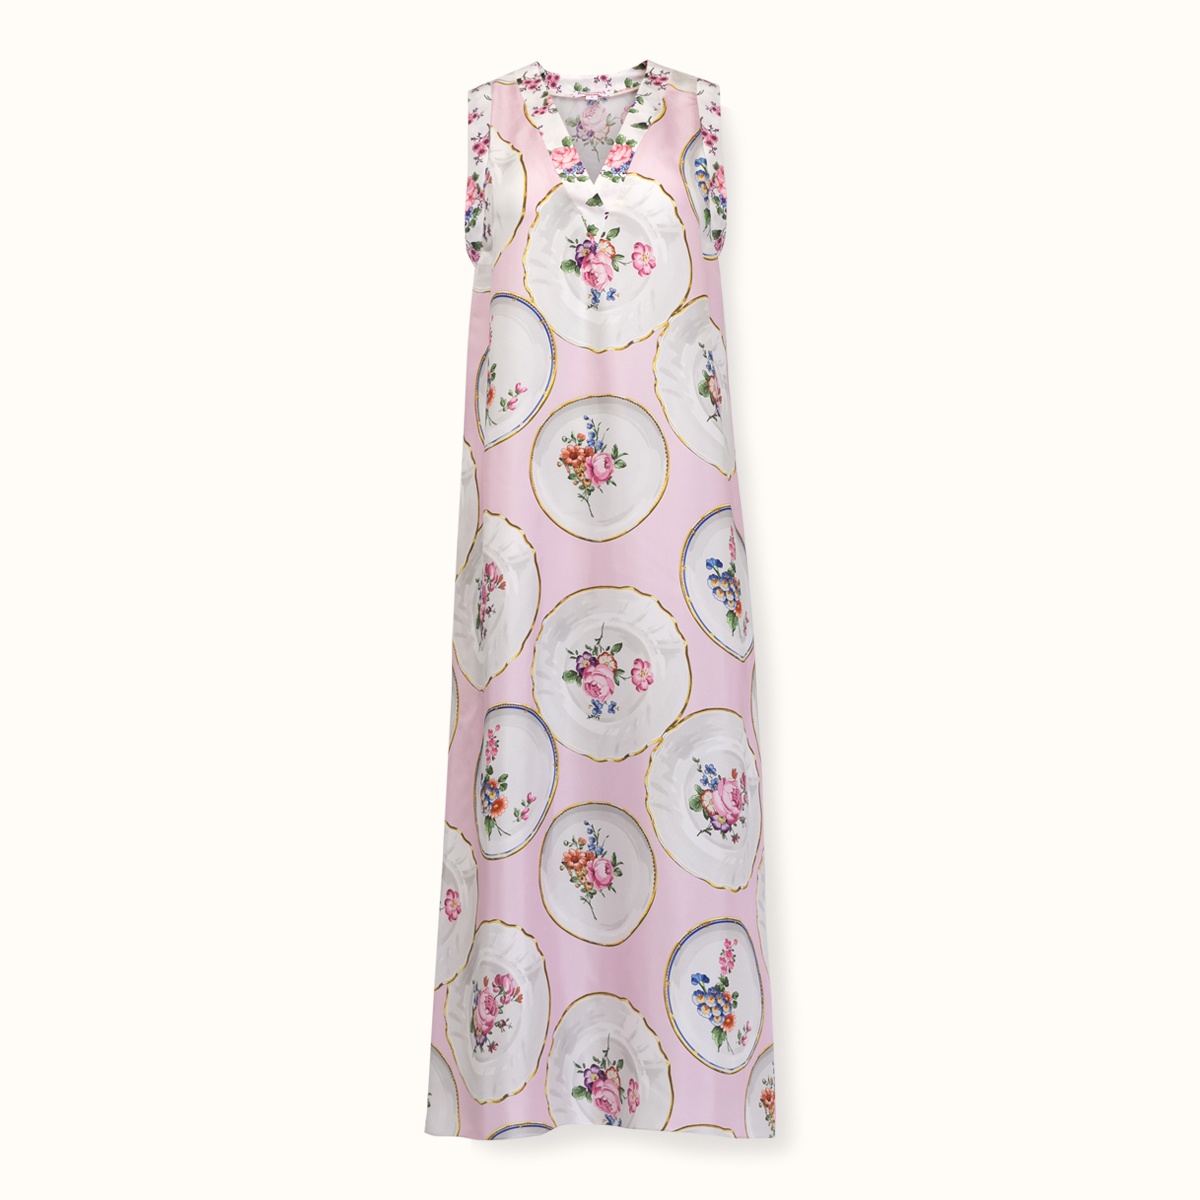 Dress "PORCELAIN" silk on a pink background by Kokosha - Dresses